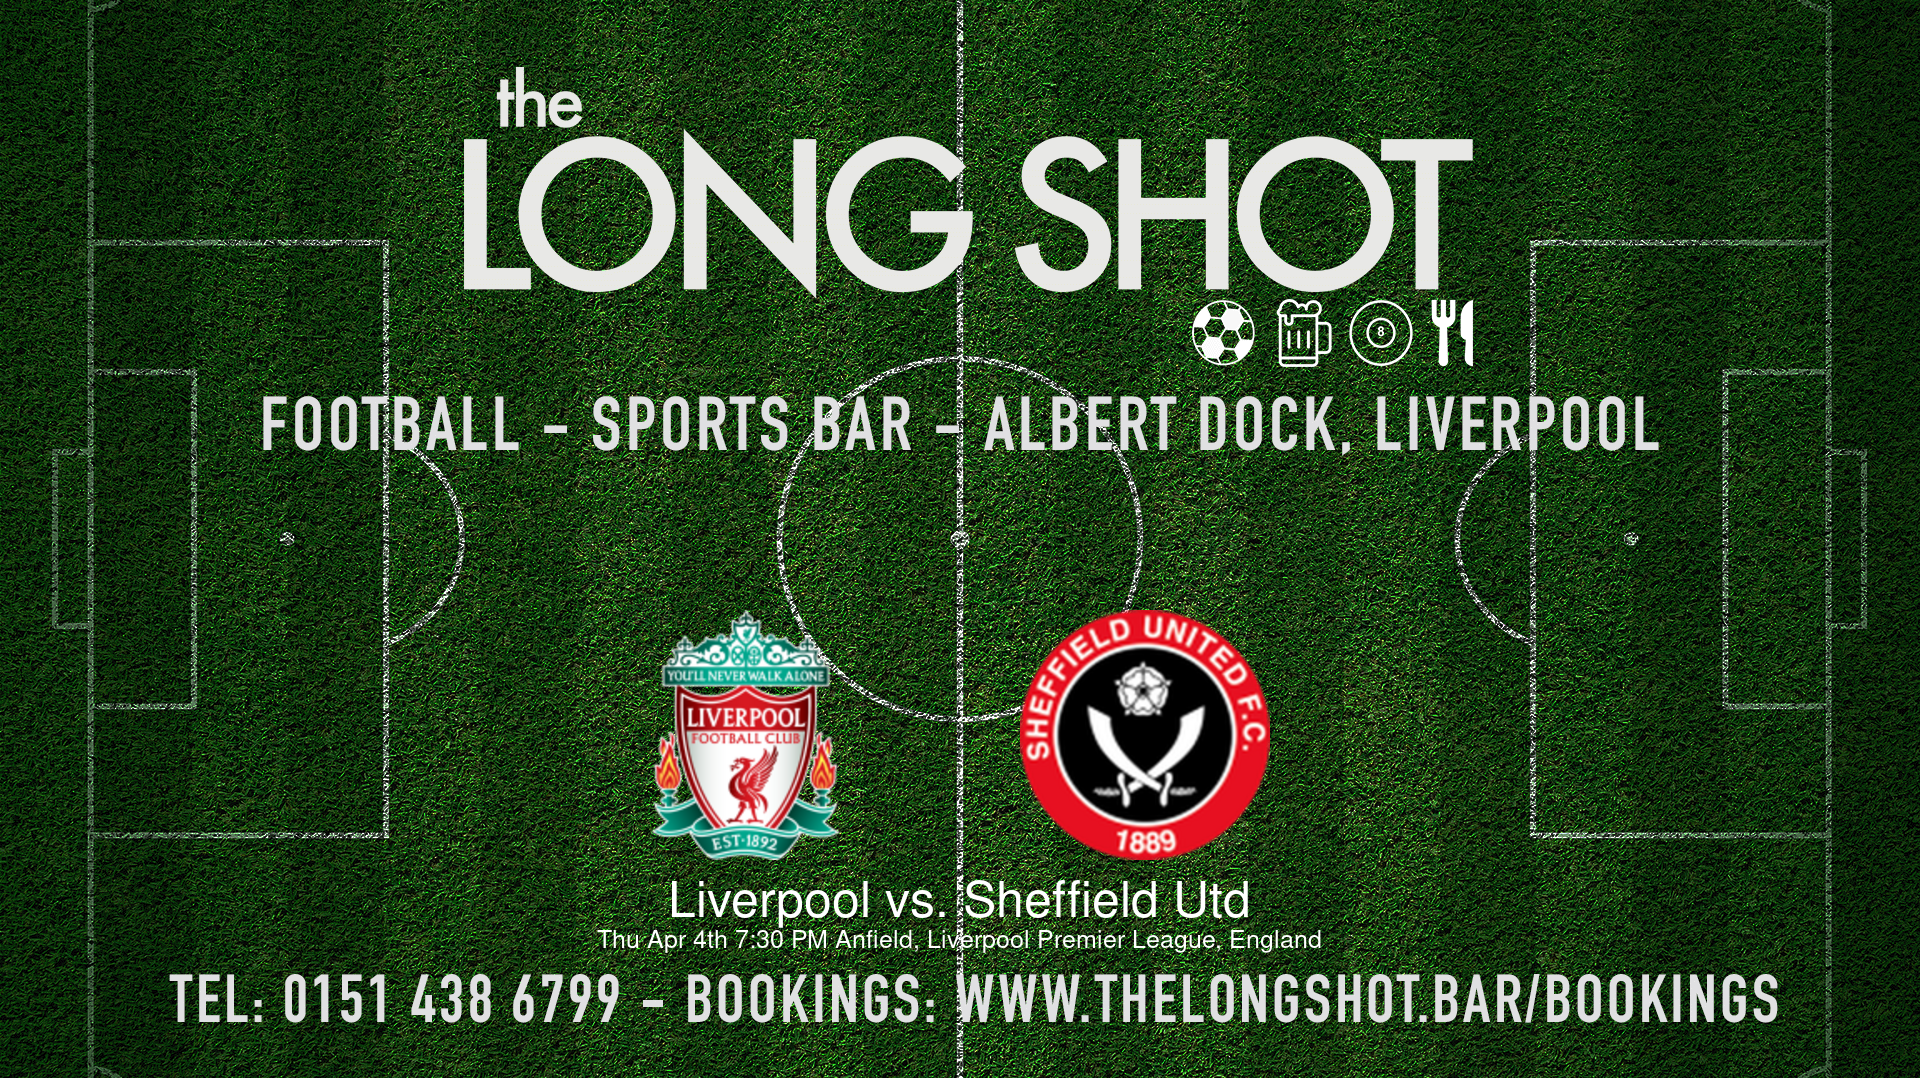 Event image - Liverpool vs. Sheffield Utd